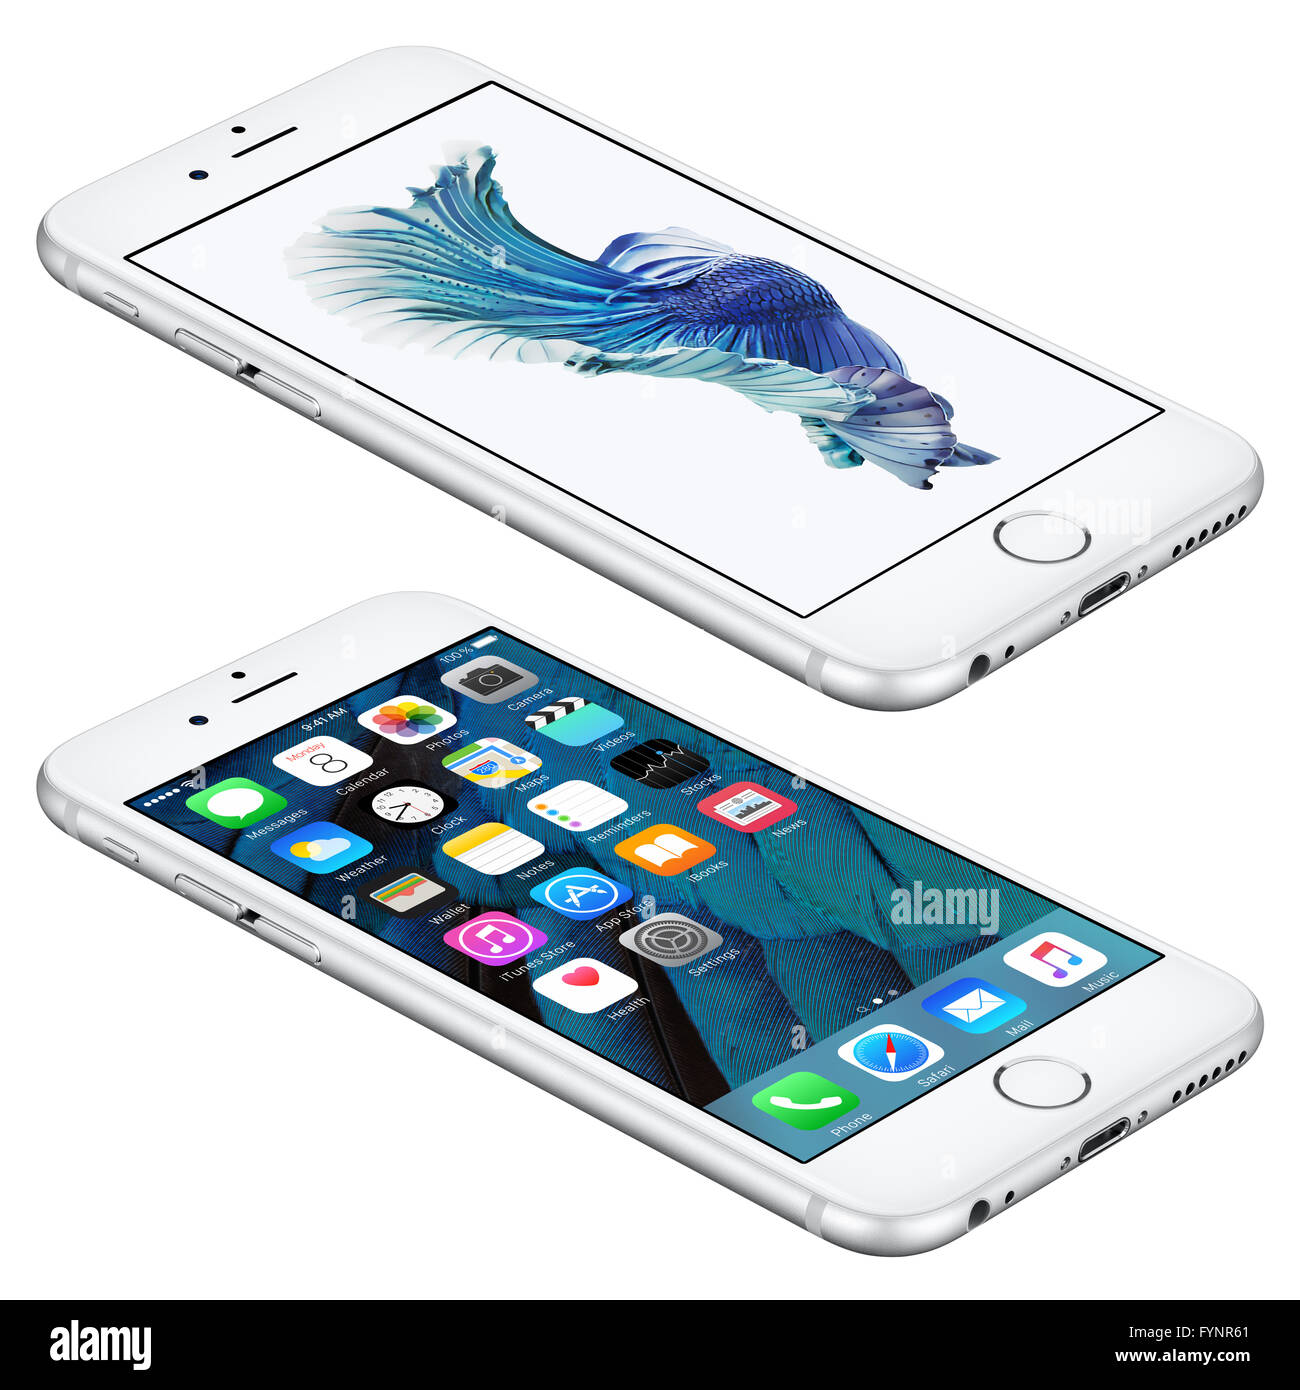 Varna, Bulgarien - 25. Oktober 2015: Silber Apple iPhone 6 s liegt auf der Oberfläche mit mobilen Betriebssystem iOS 9 Stockfoto